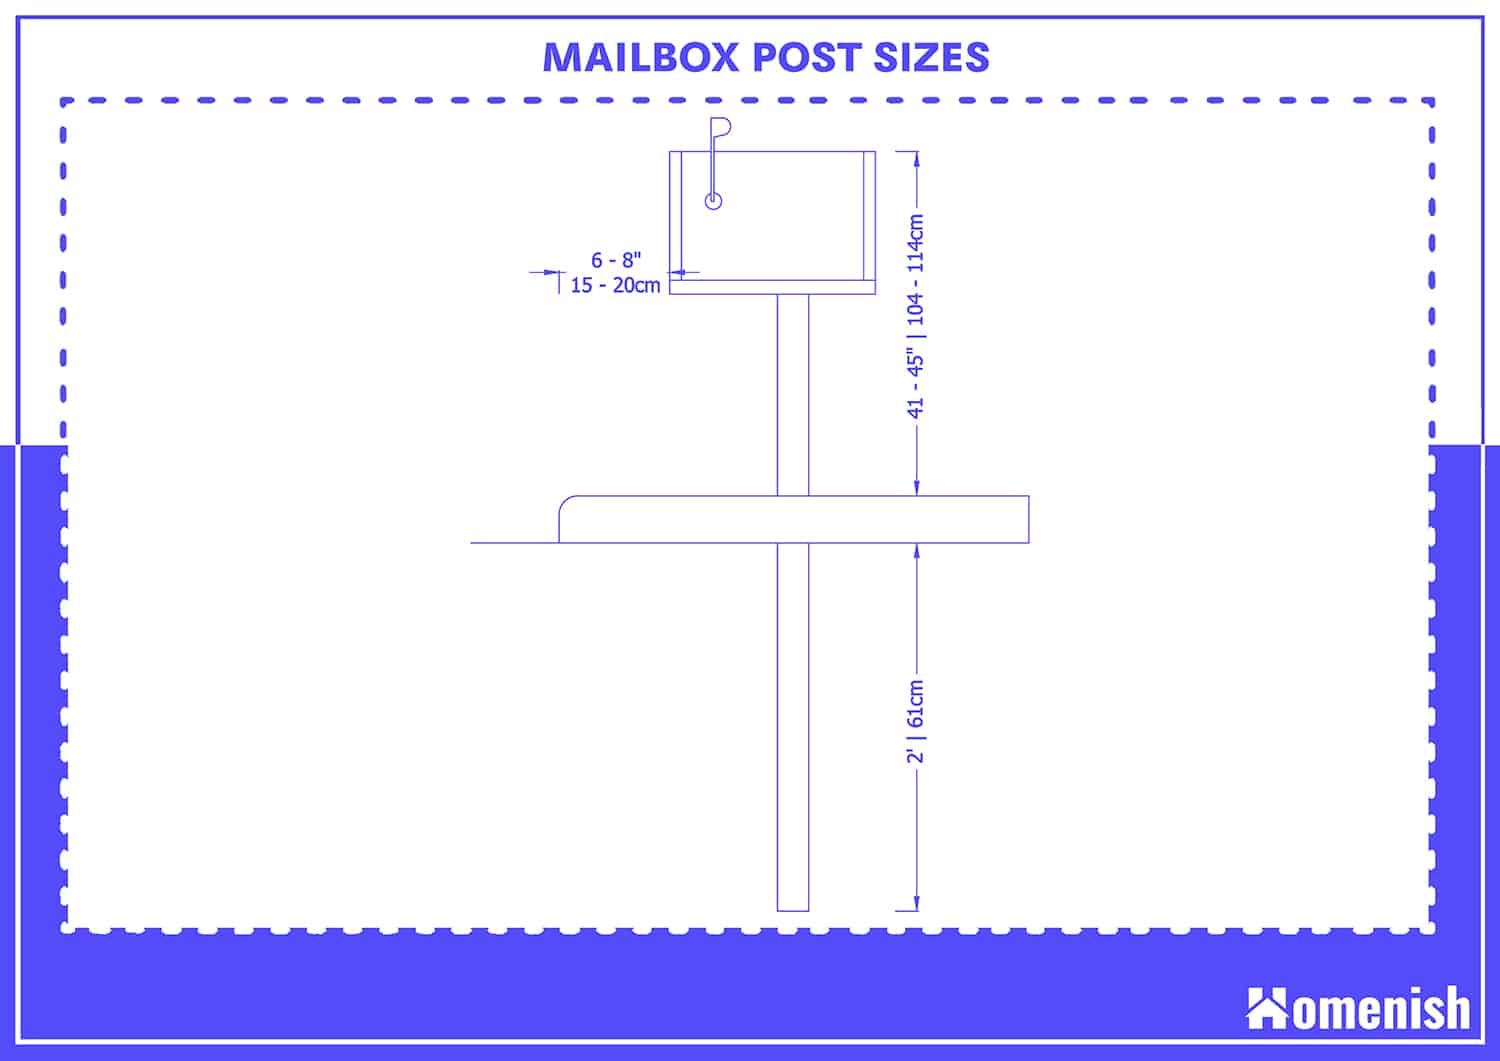 Mailbox Post Size